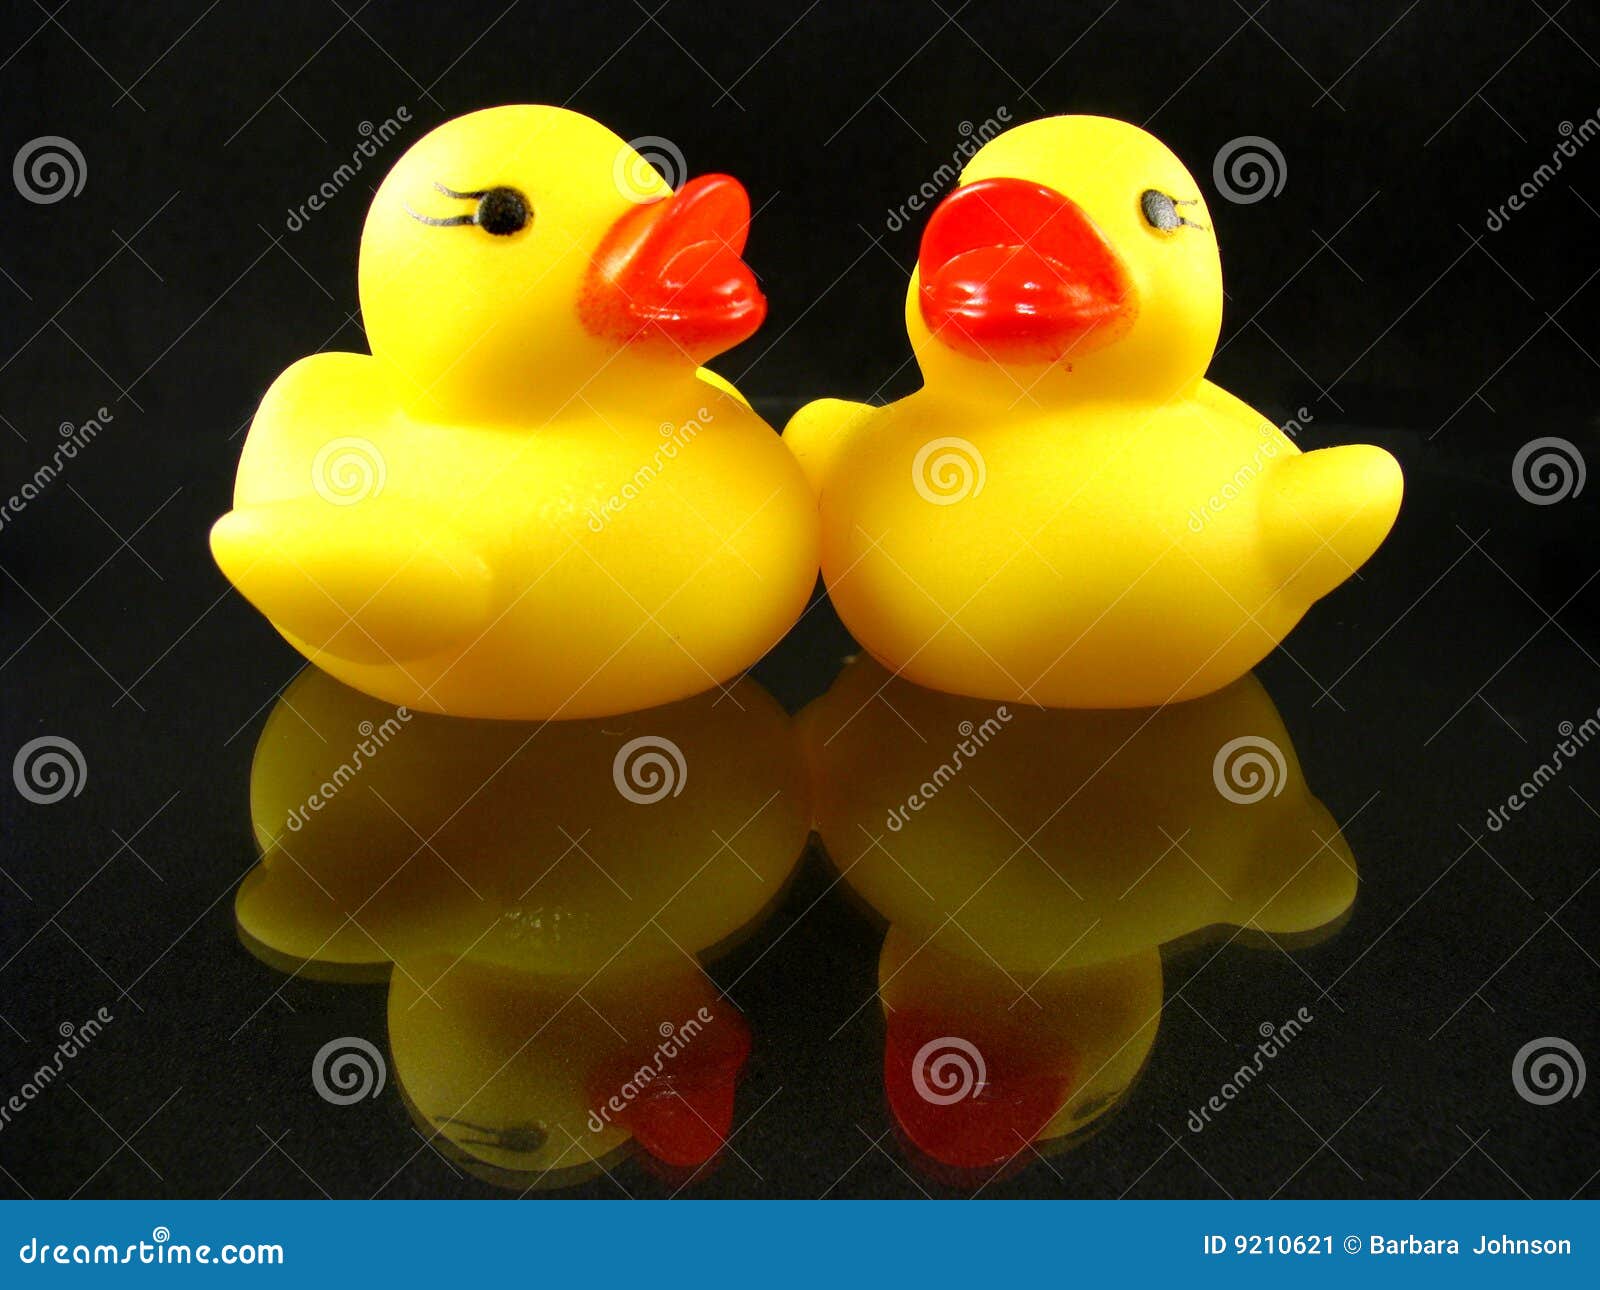 rubber duckies